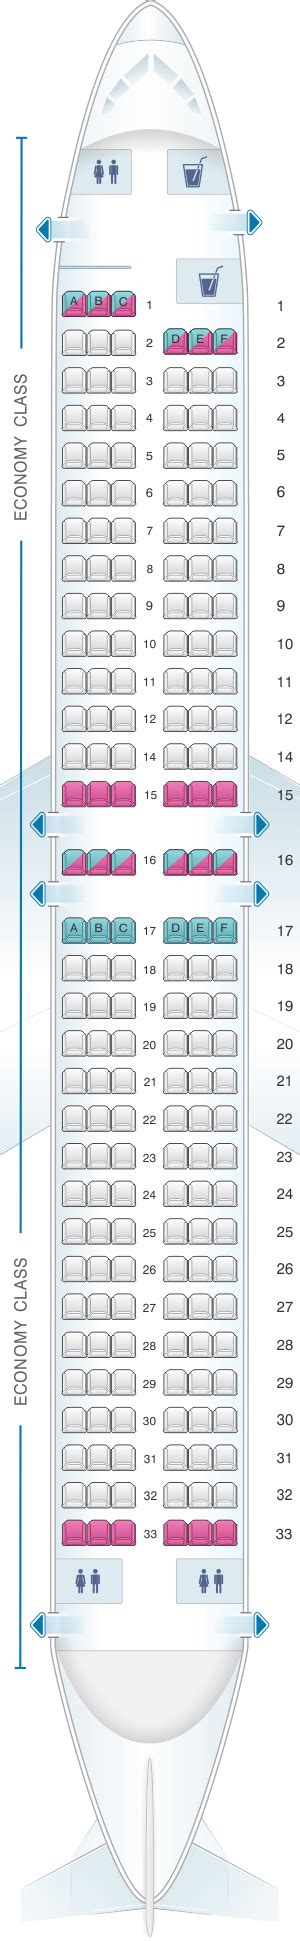 seat map corendon airlines boeing   seatmaestrocom